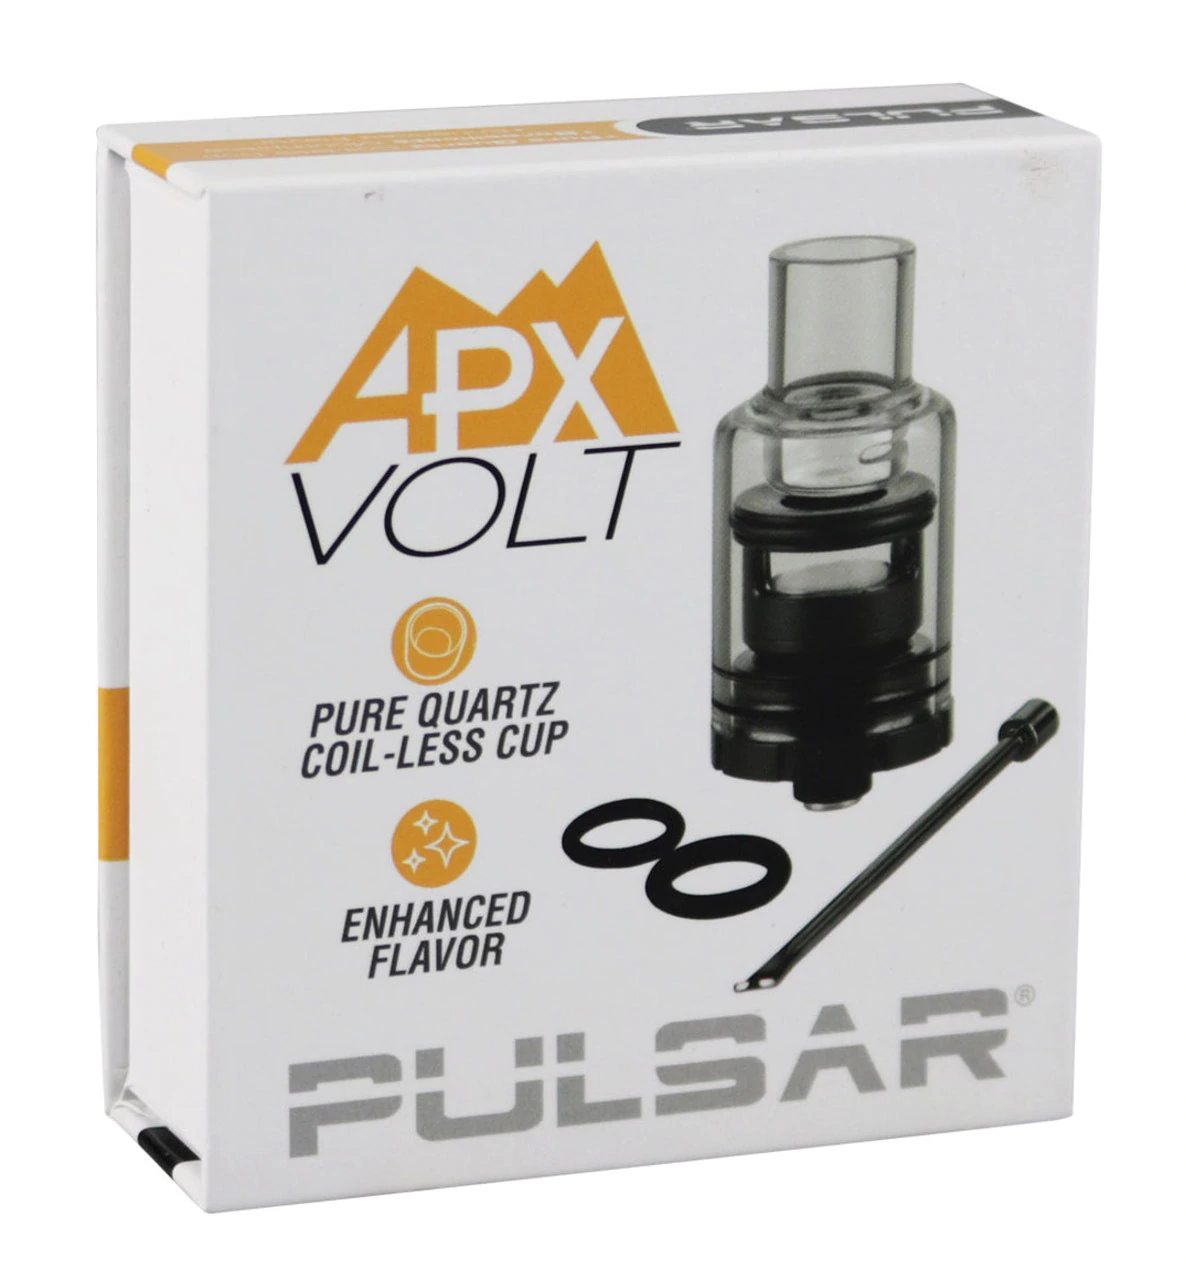 Pulsar-APX-VOLT-Variable-Voltage-Atomizer-Tank_media-2__61774.1540226635